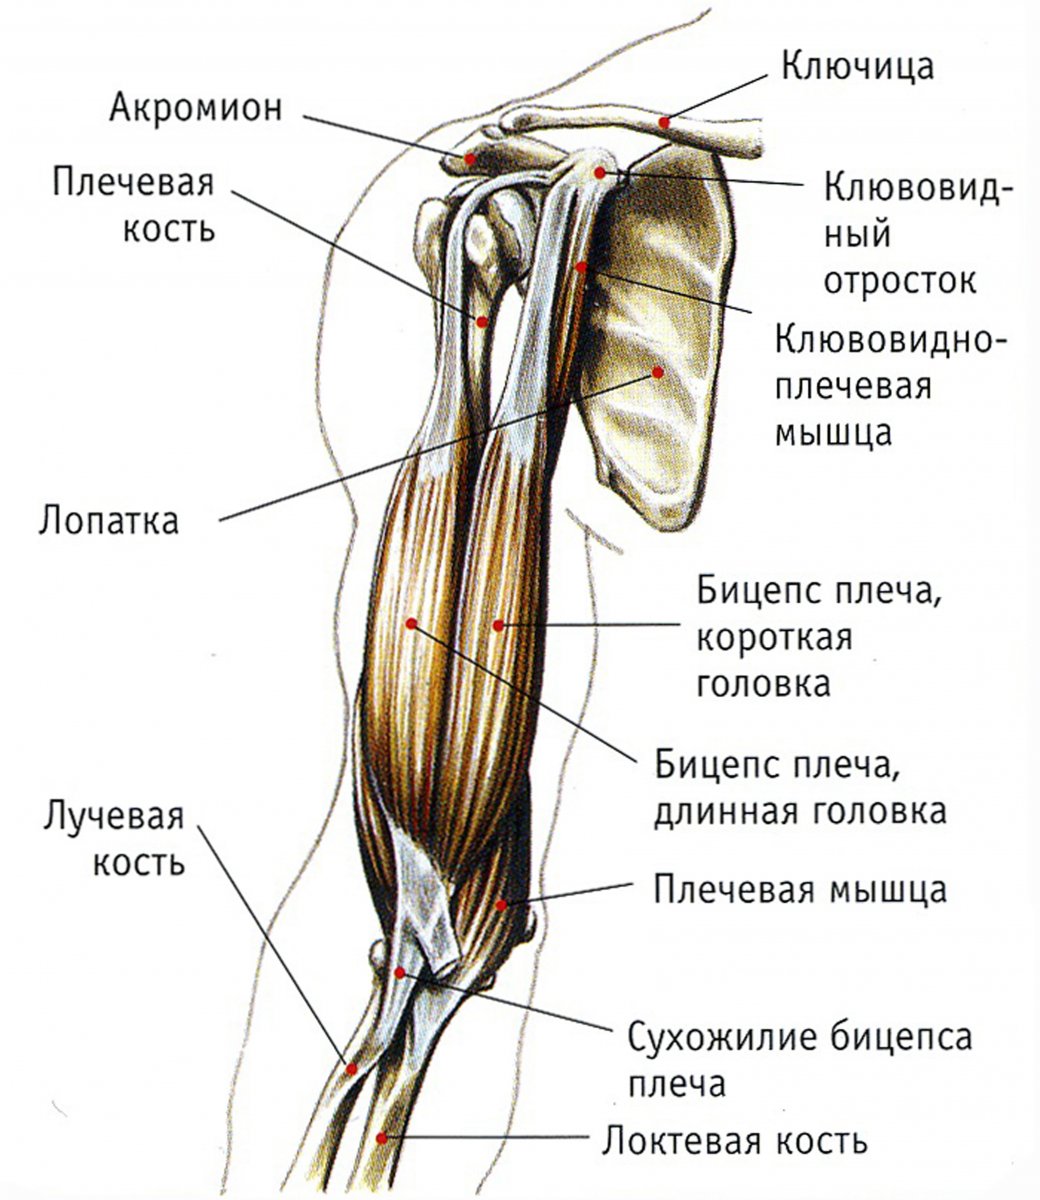 Клювовидно-плечевая мышца (m. coracobrachialis)